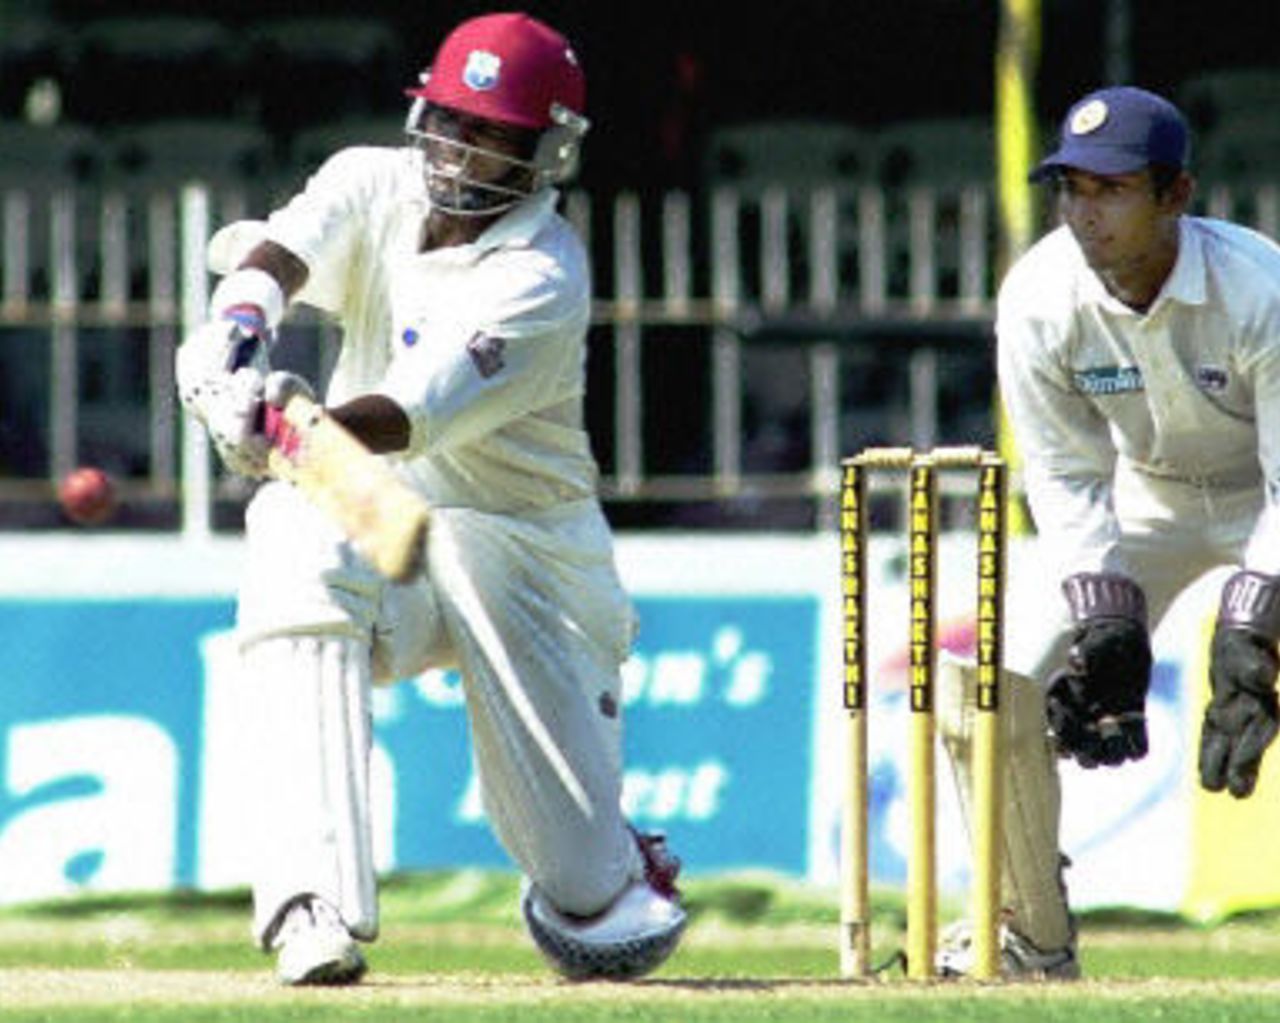 Brian Lara sweeps a ball to the boundary for four as wicketkeeper Sangakkara looks on